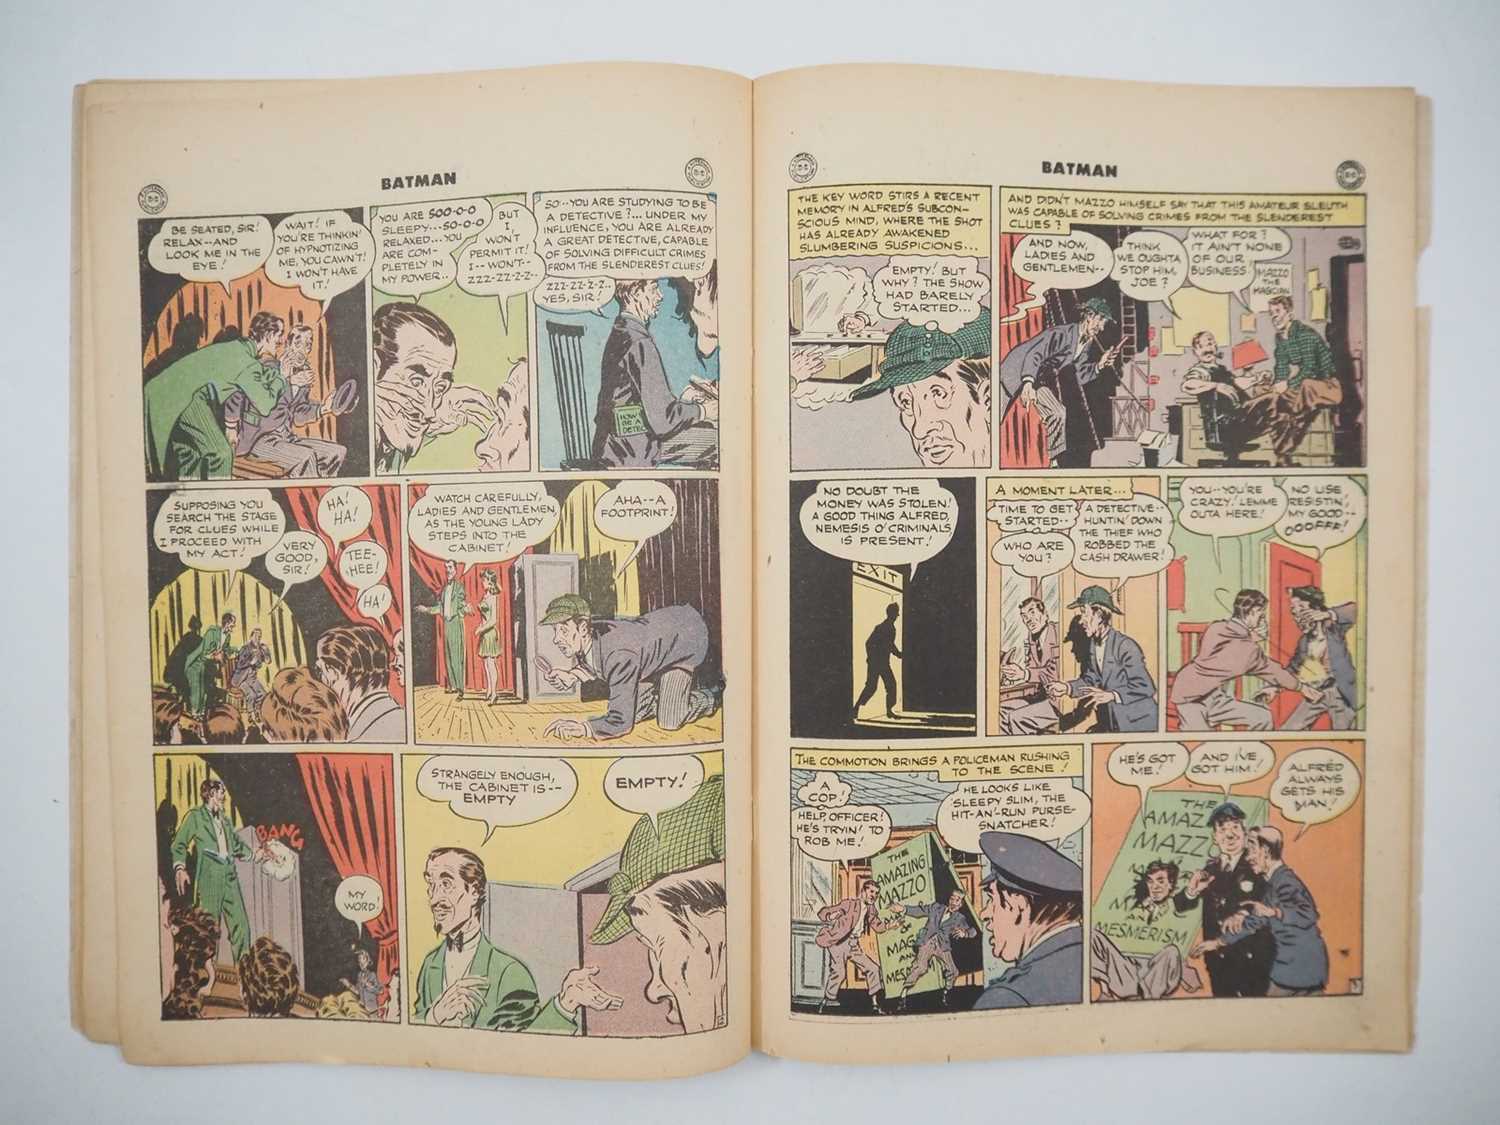 BATMAN #25 (1944 - DC) - First time that two major Batman villains (Joker and Penguin) team-up - - Image 21 of 37